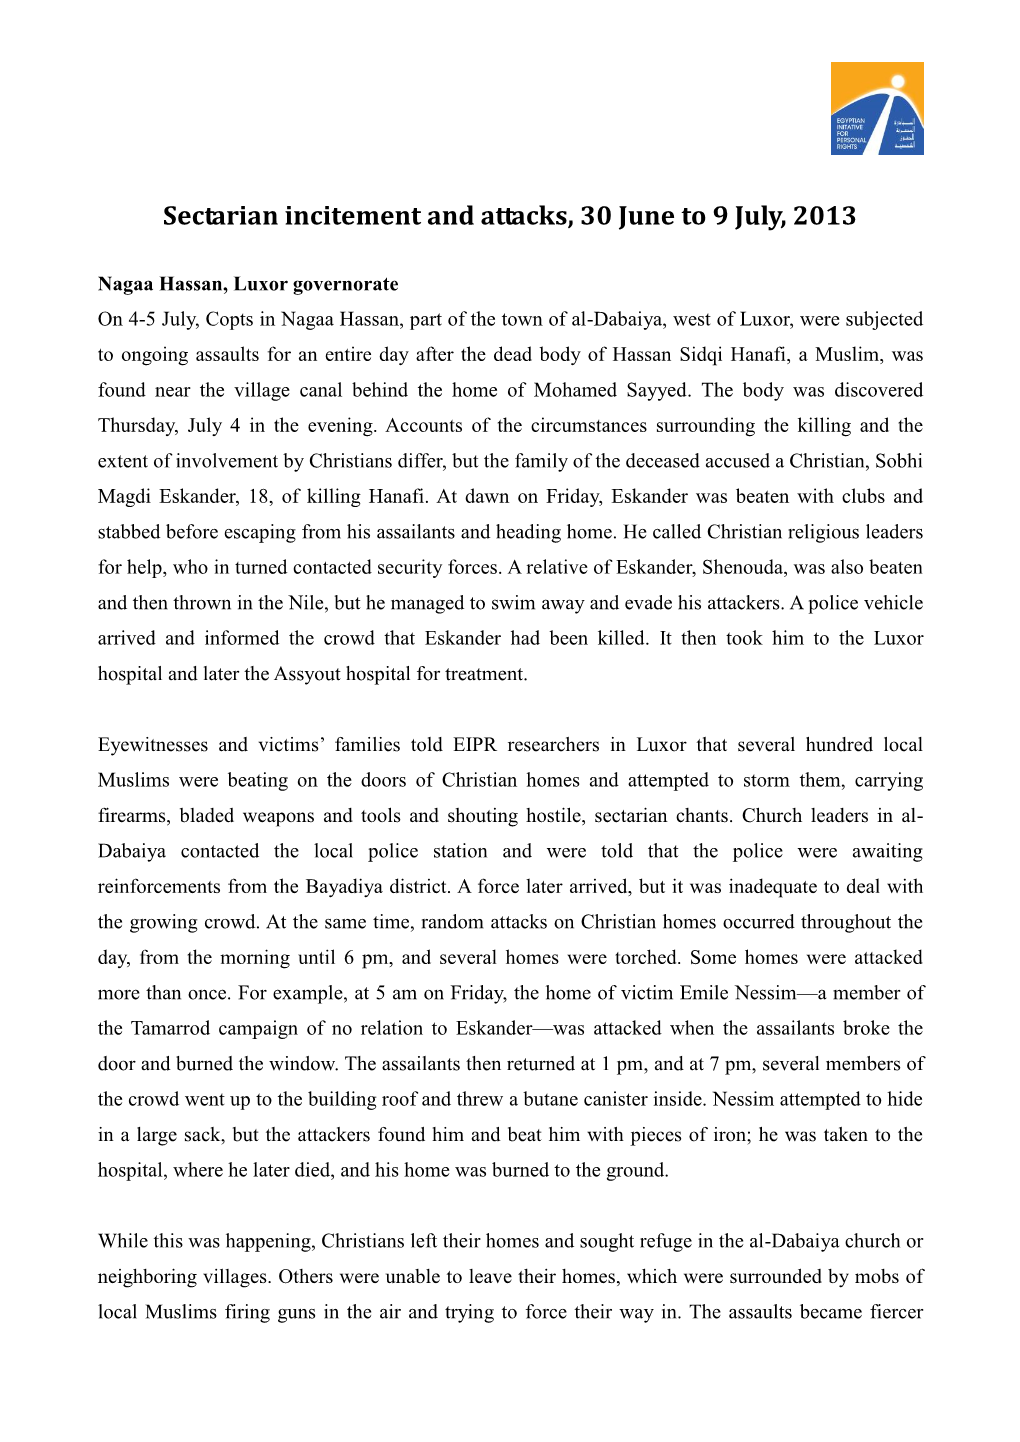 Download Sectarian Attacks Detailed Report June 30.Pdf